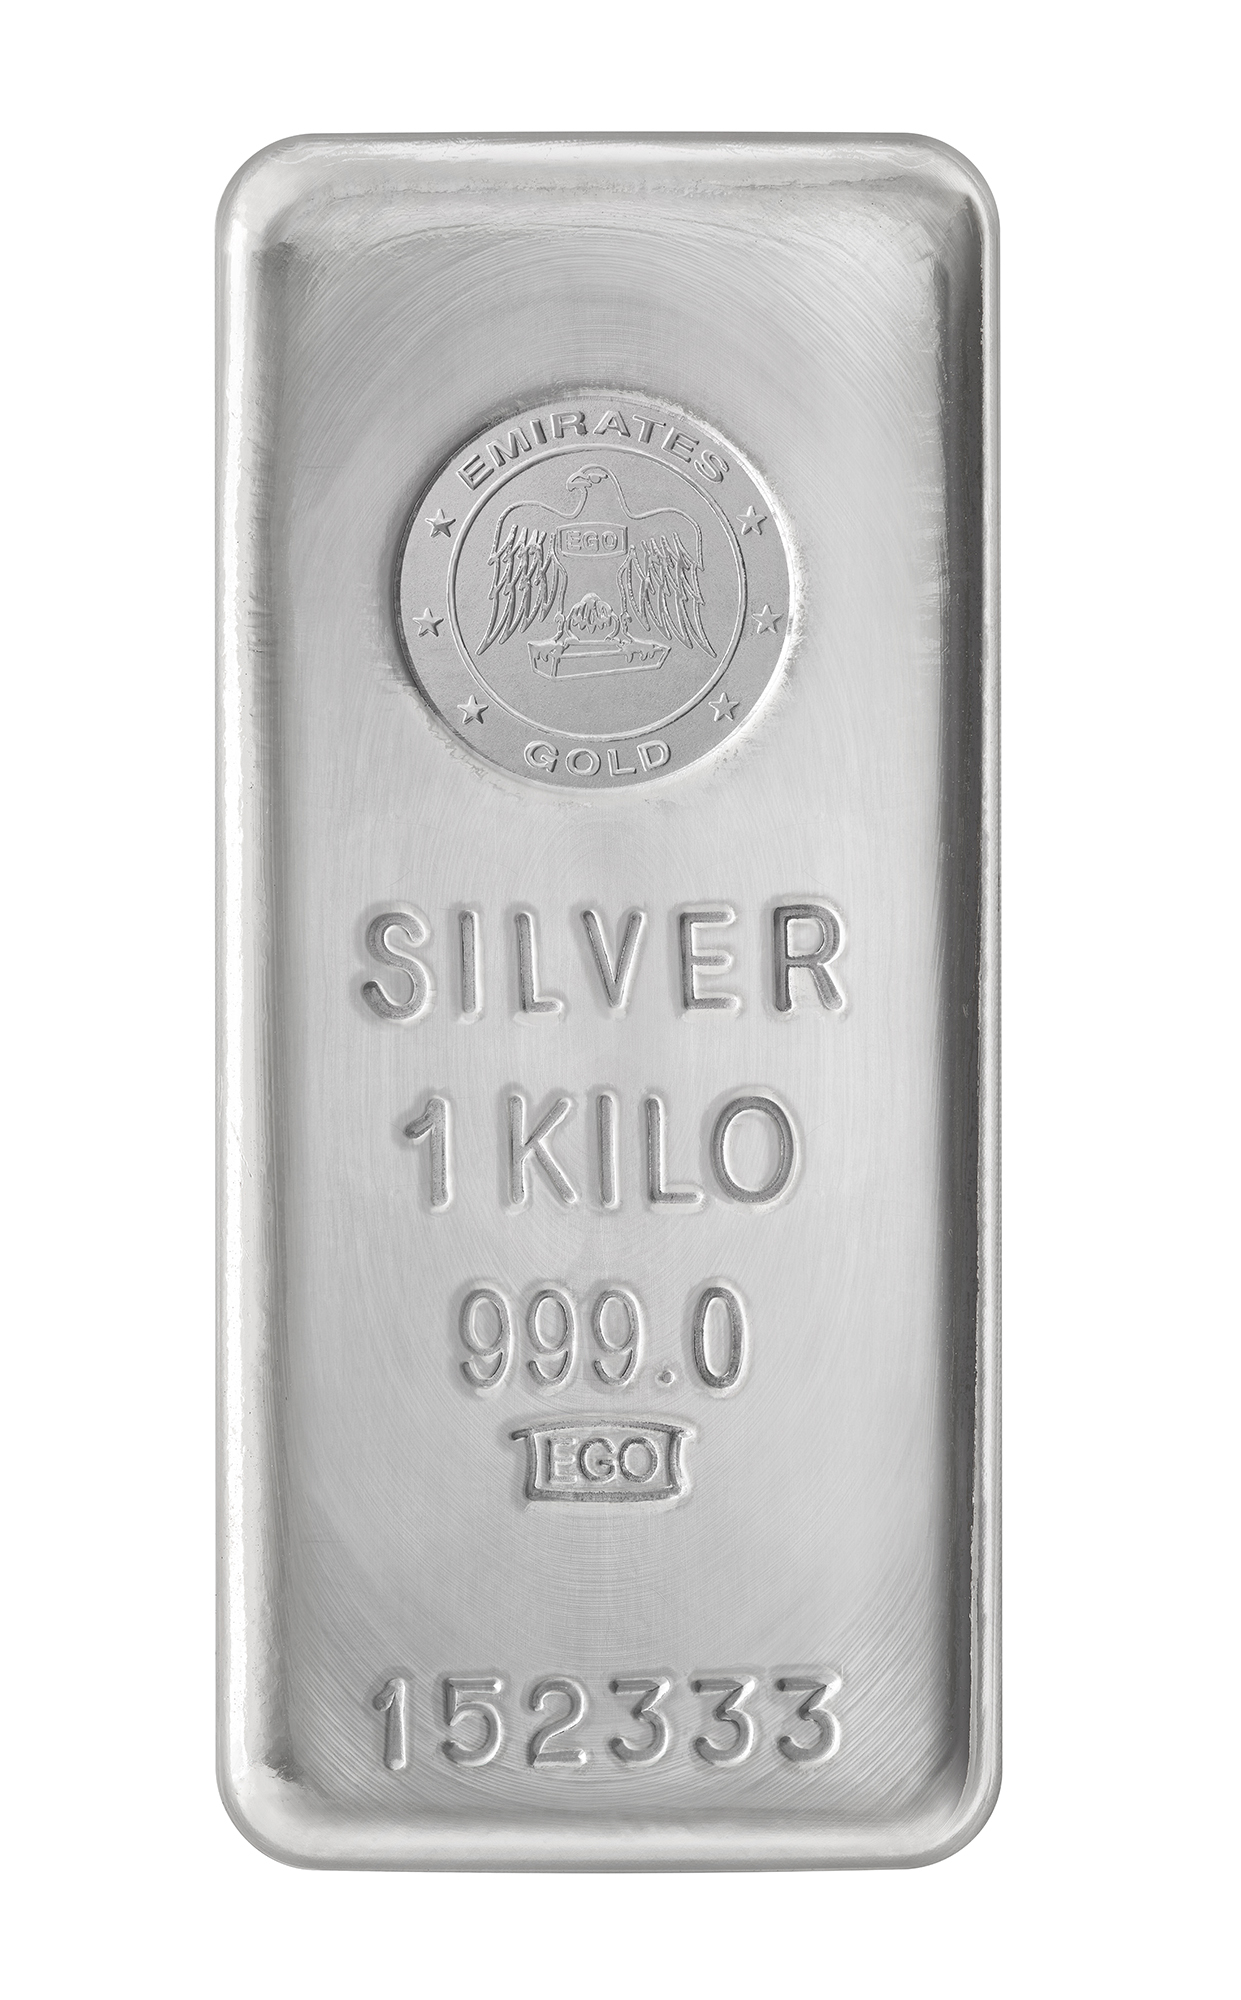 https://www.emiratesgold.ae/wp-content/uploads/2022/11/1-Kilo-Cast-Bar-Silver-999.0-1.jpg